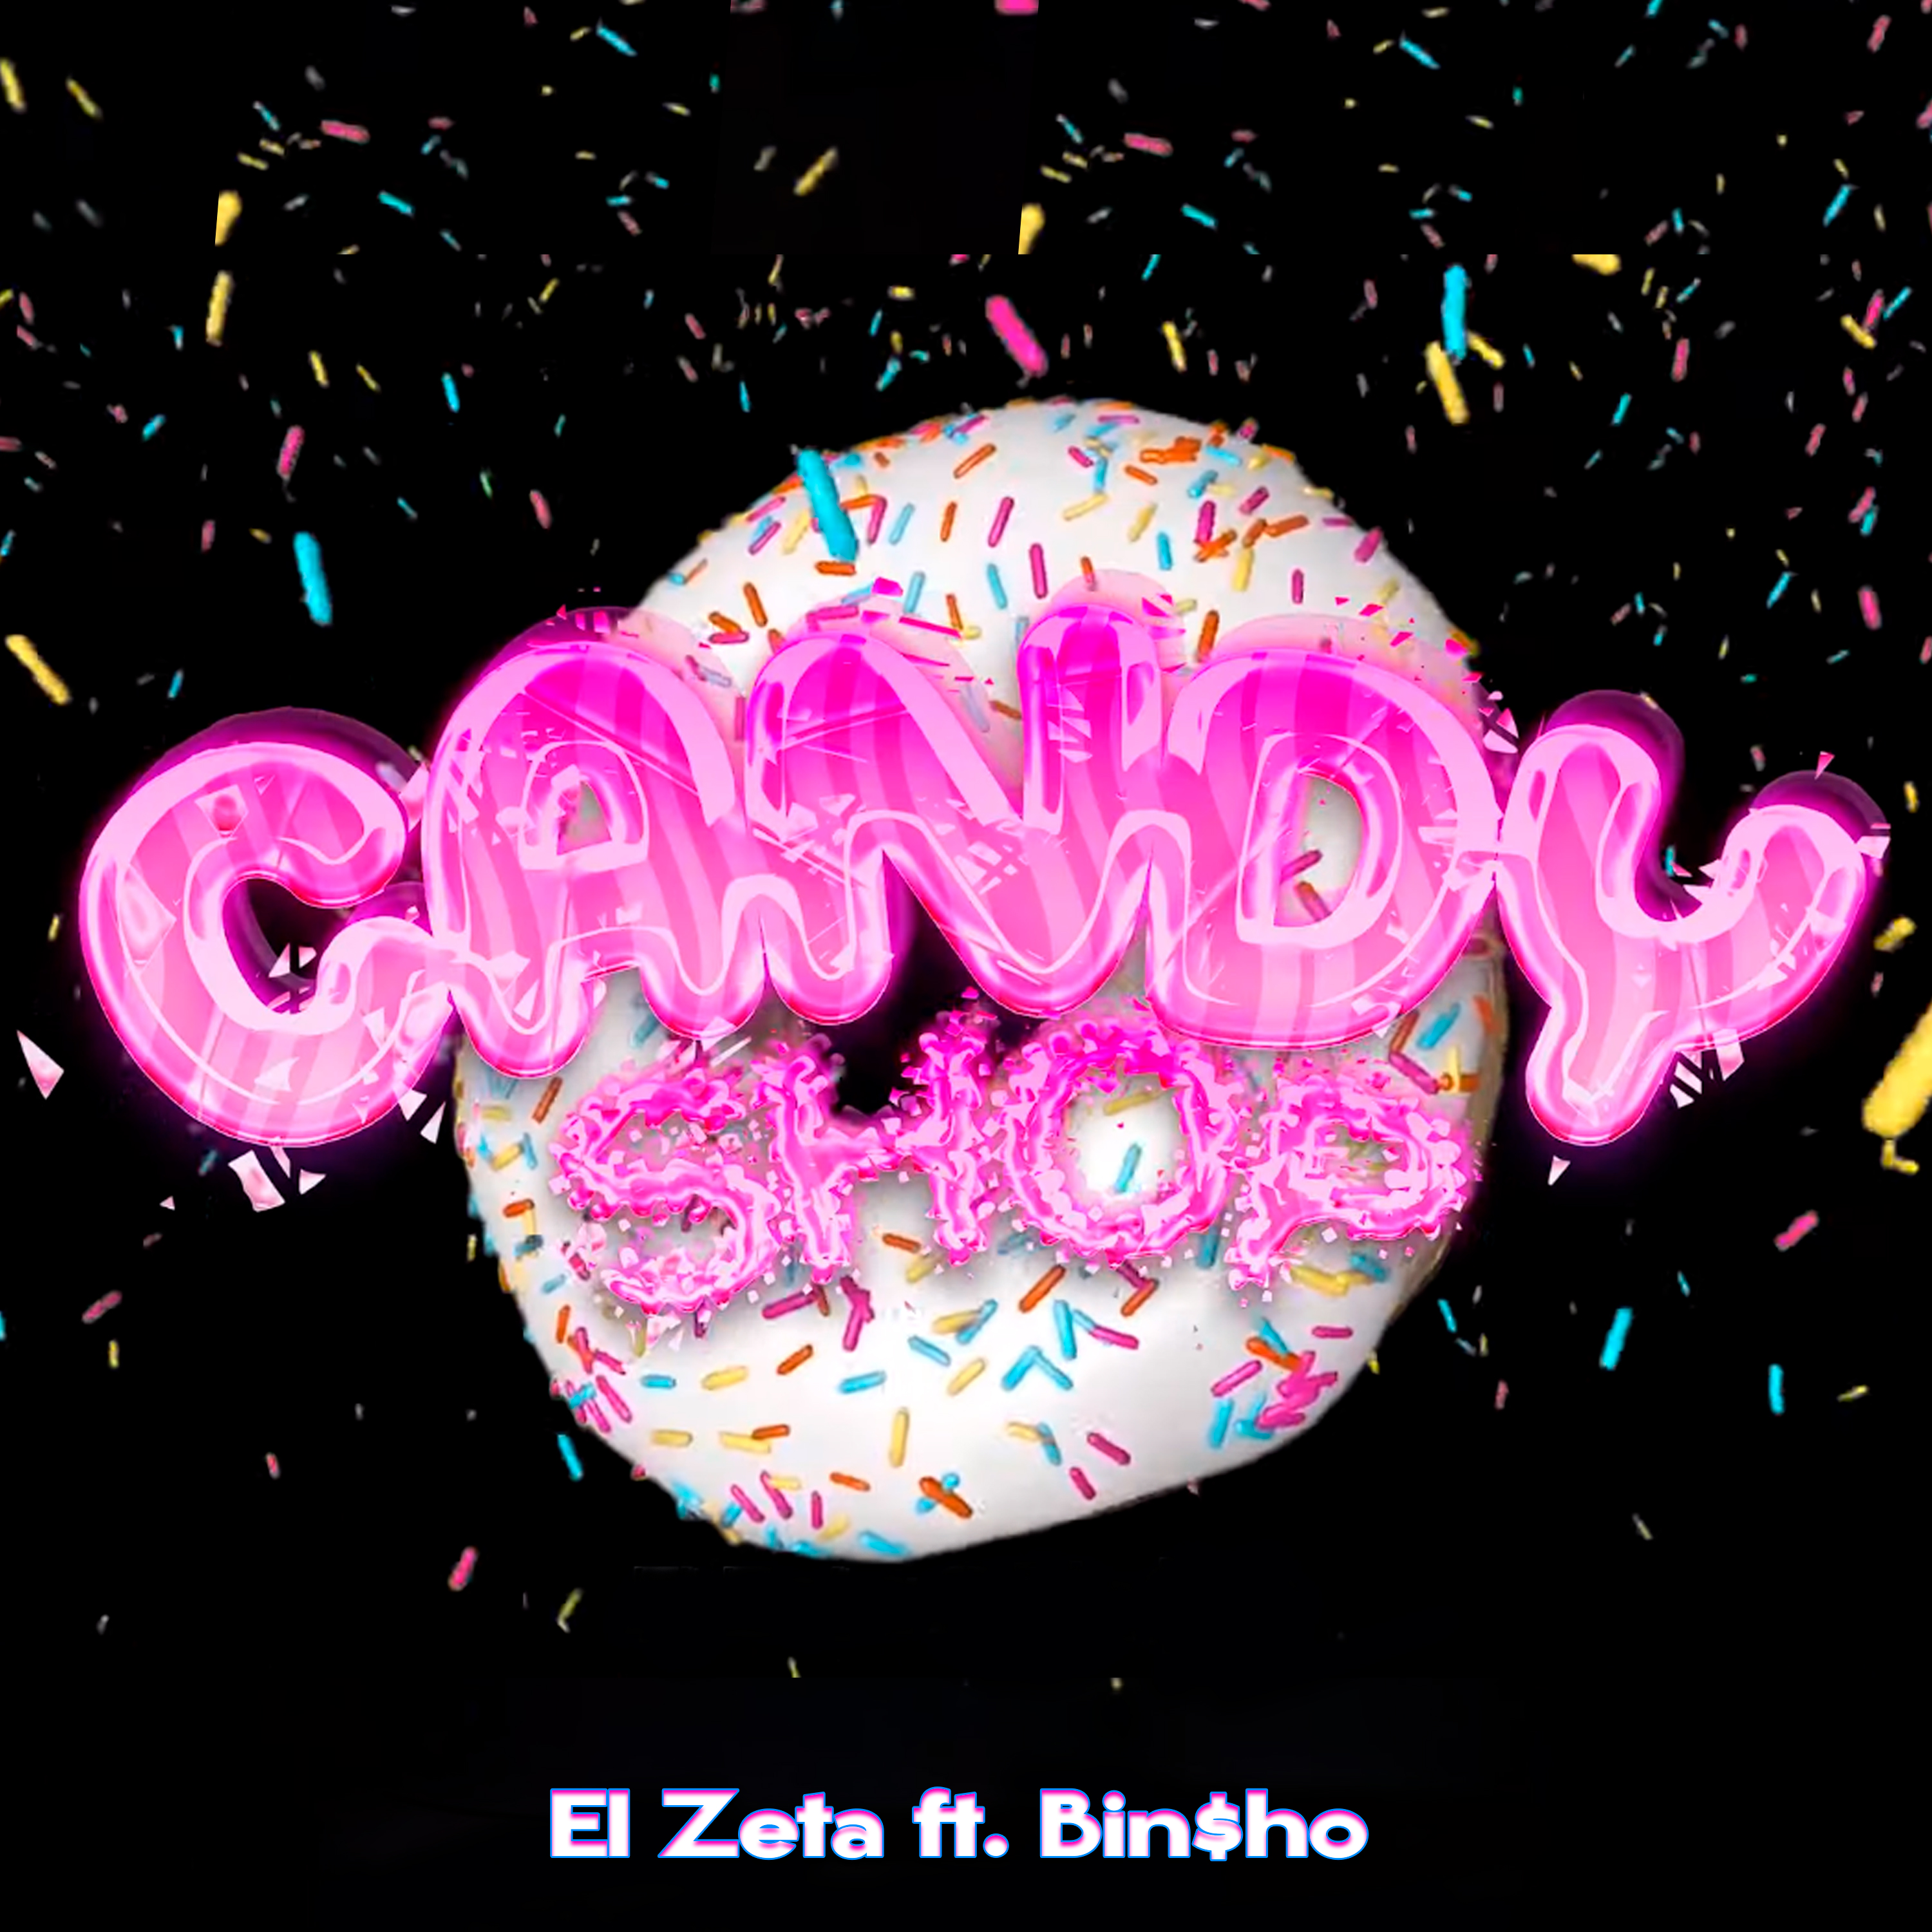 El Zeta Feat. Bin$ho - Candy Shop.mp3